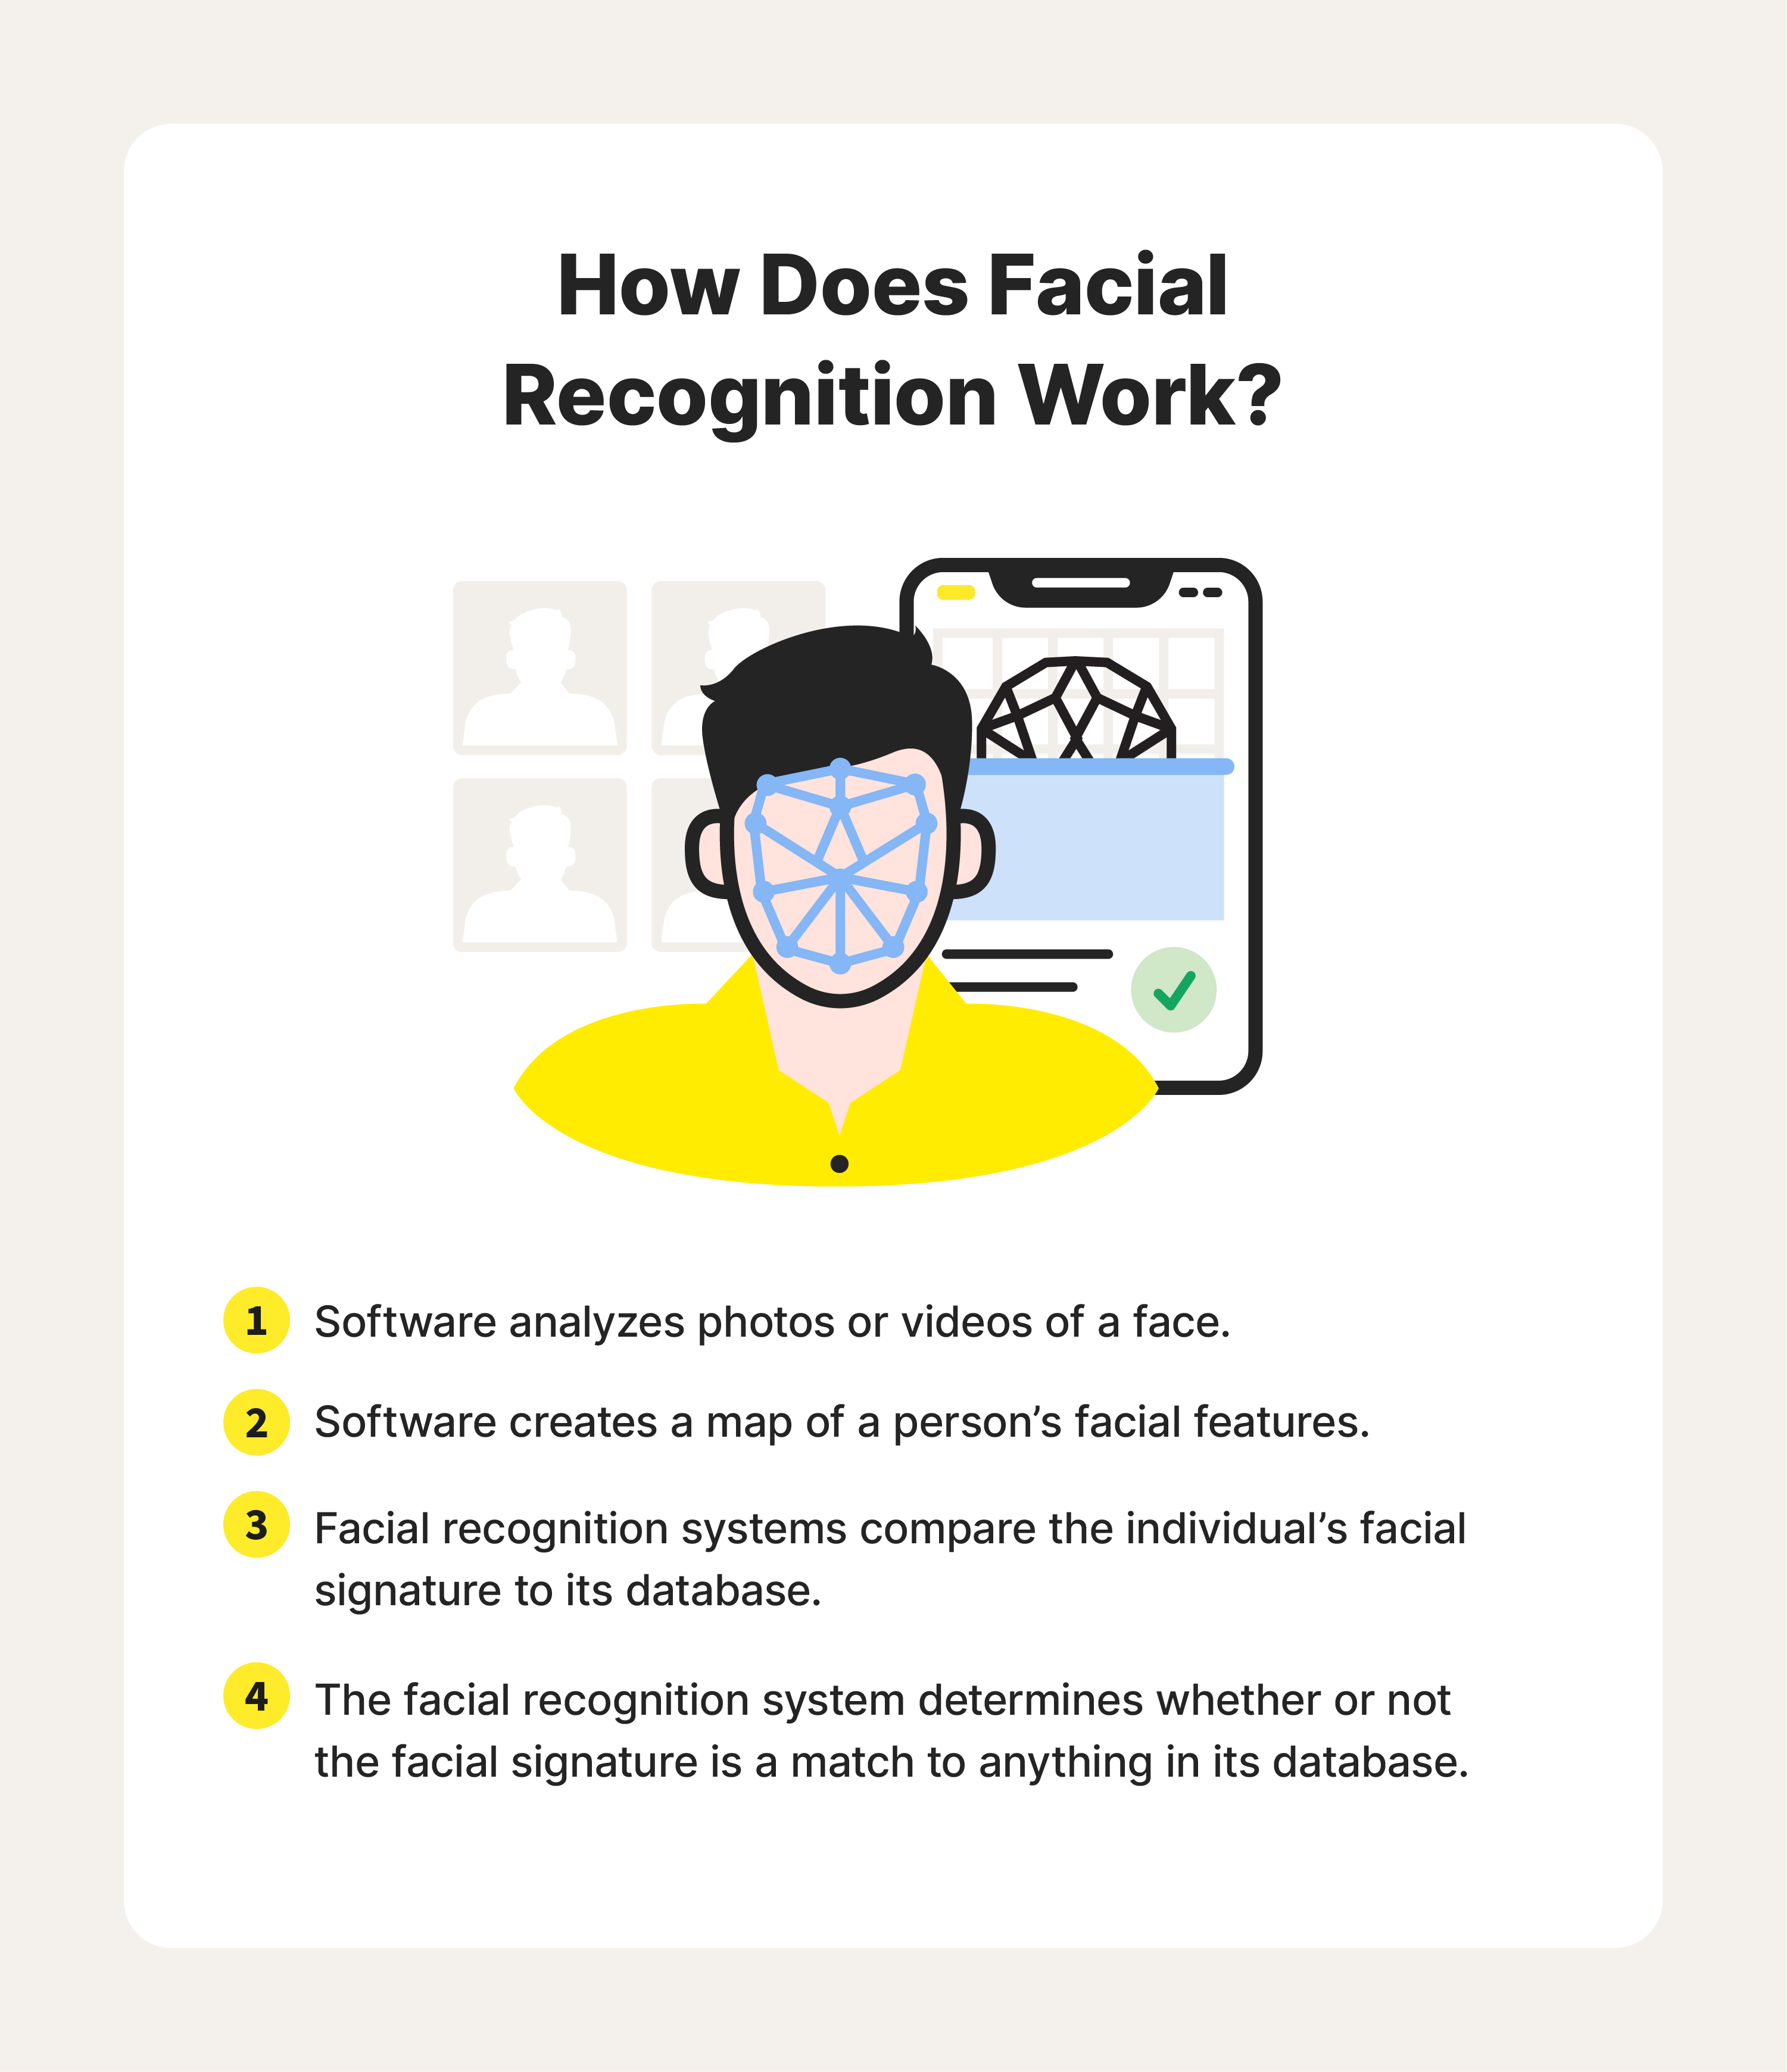 Image explains how facial recognition technology analyzes facial features.